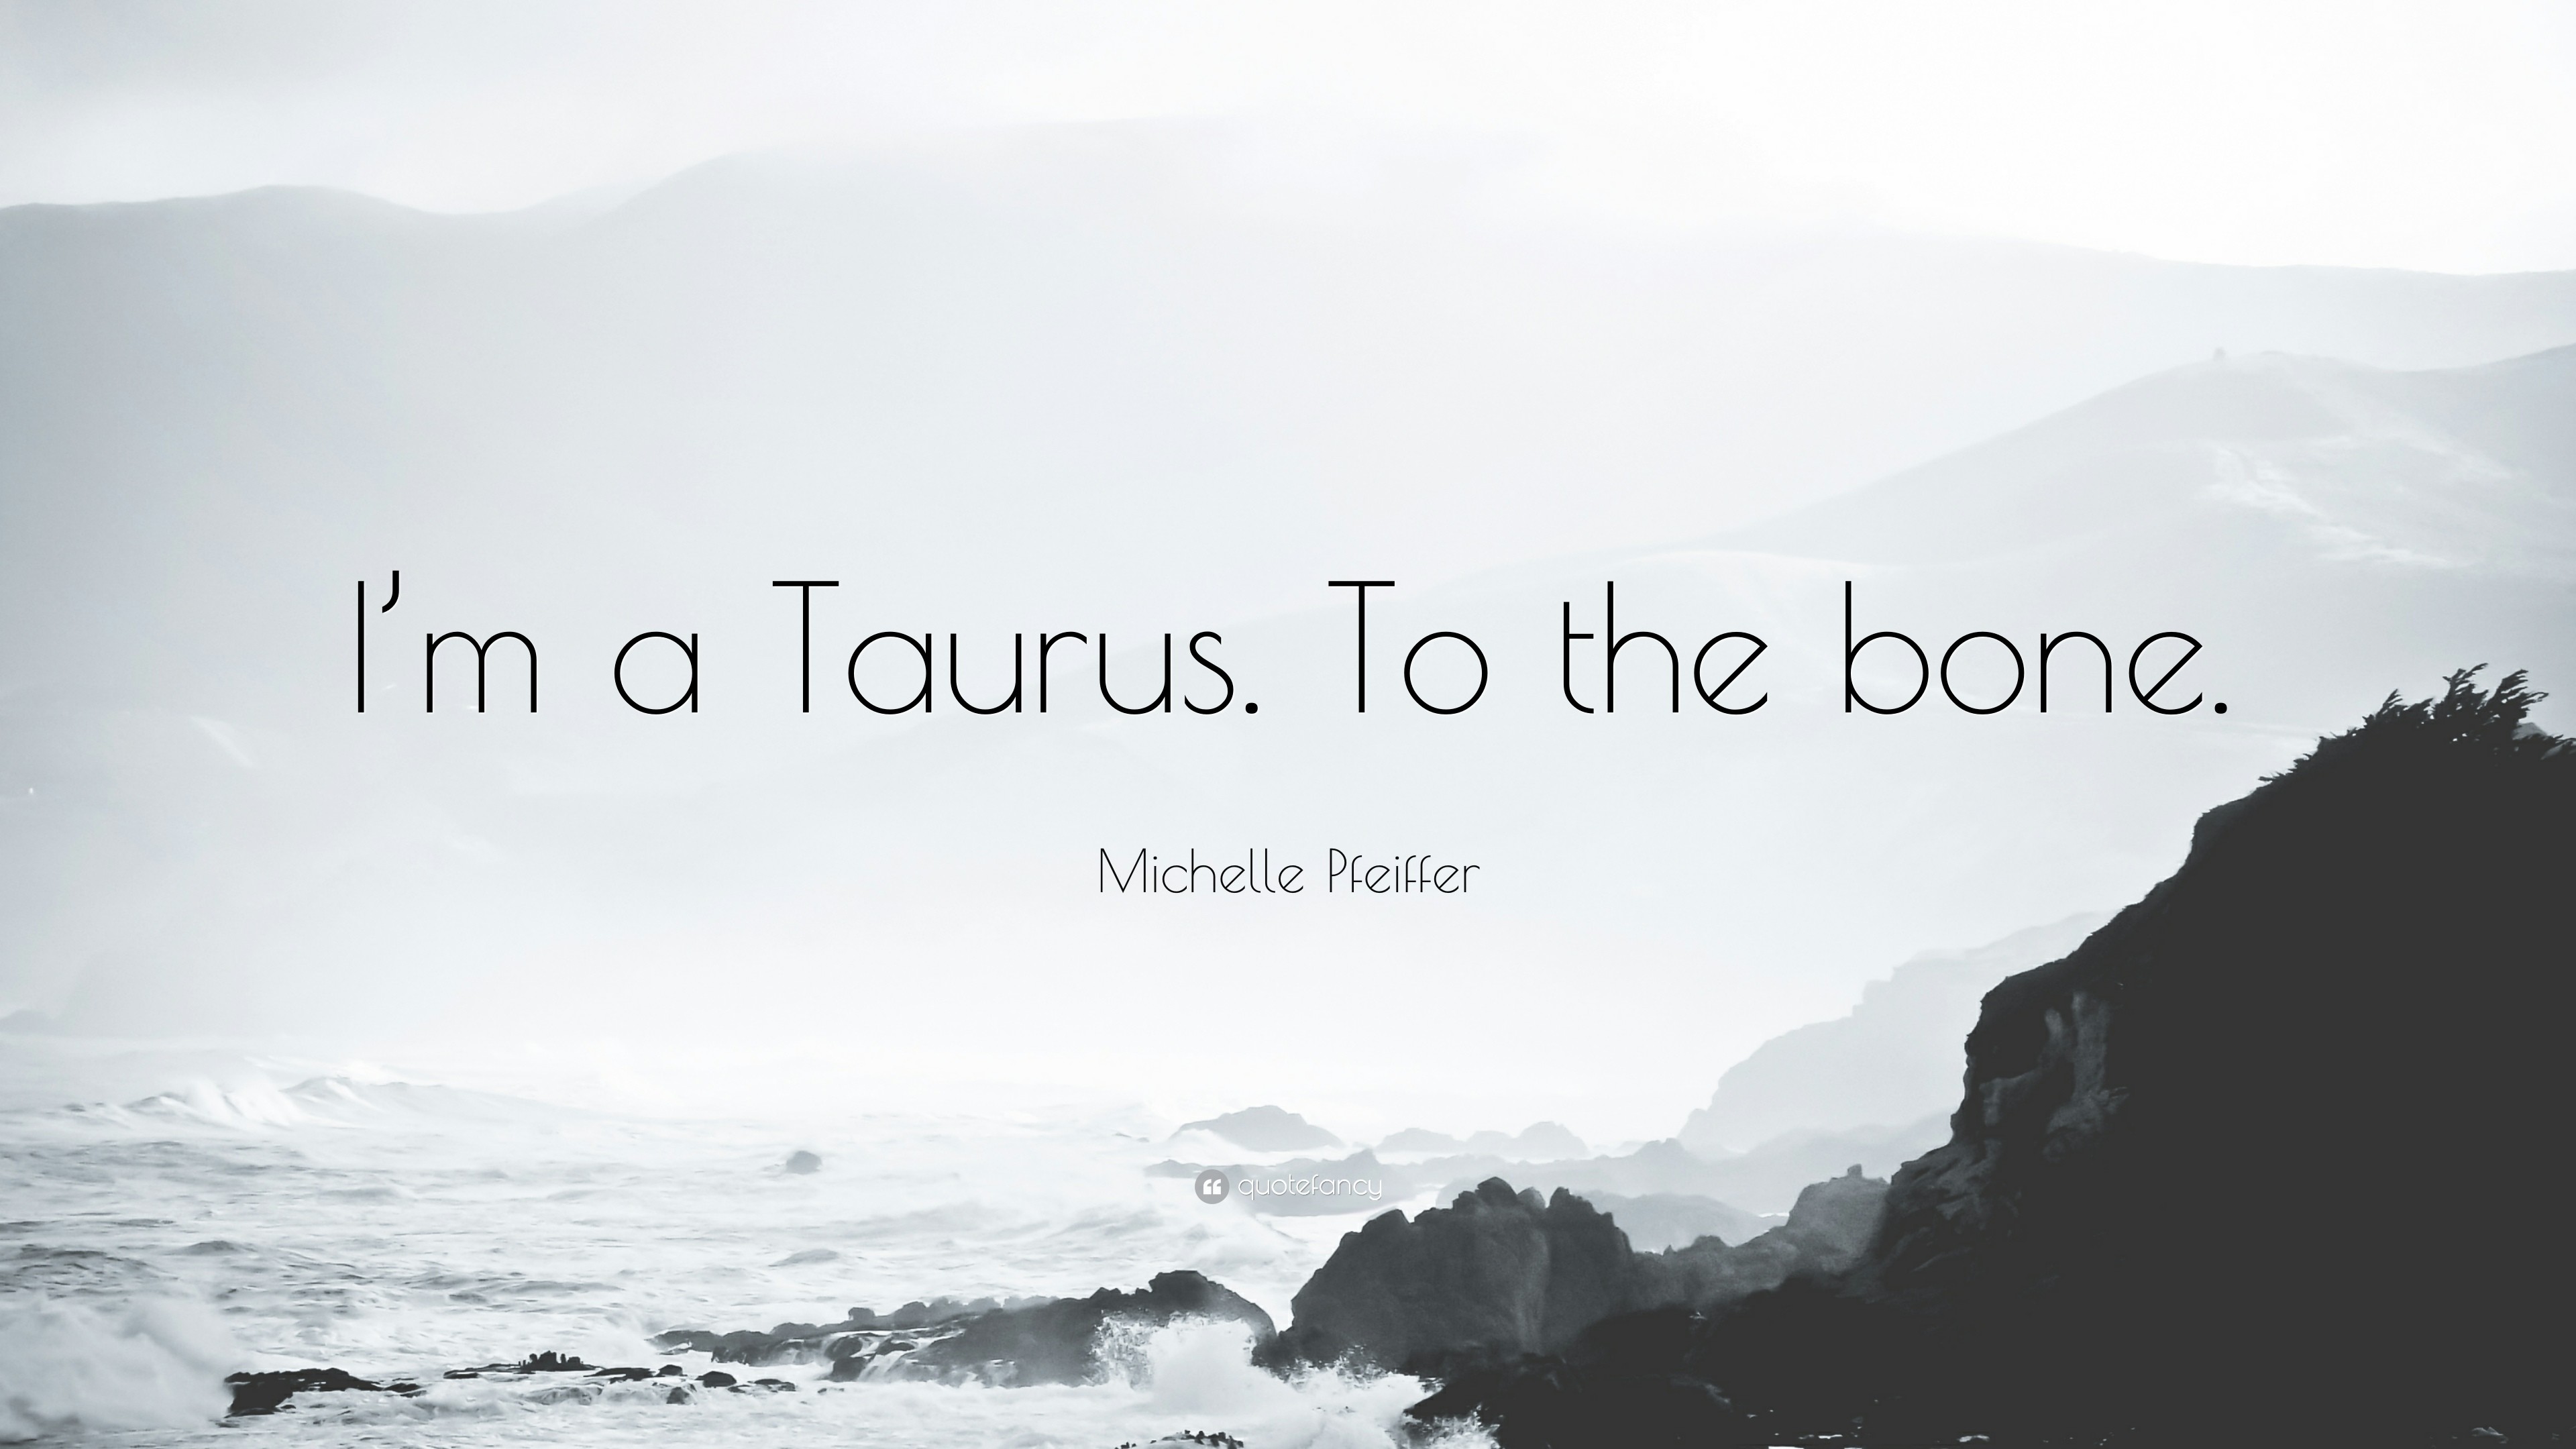 3840x2160 Michelle Pfeiffer Quote: “I'm a Taurus. To the bone.”